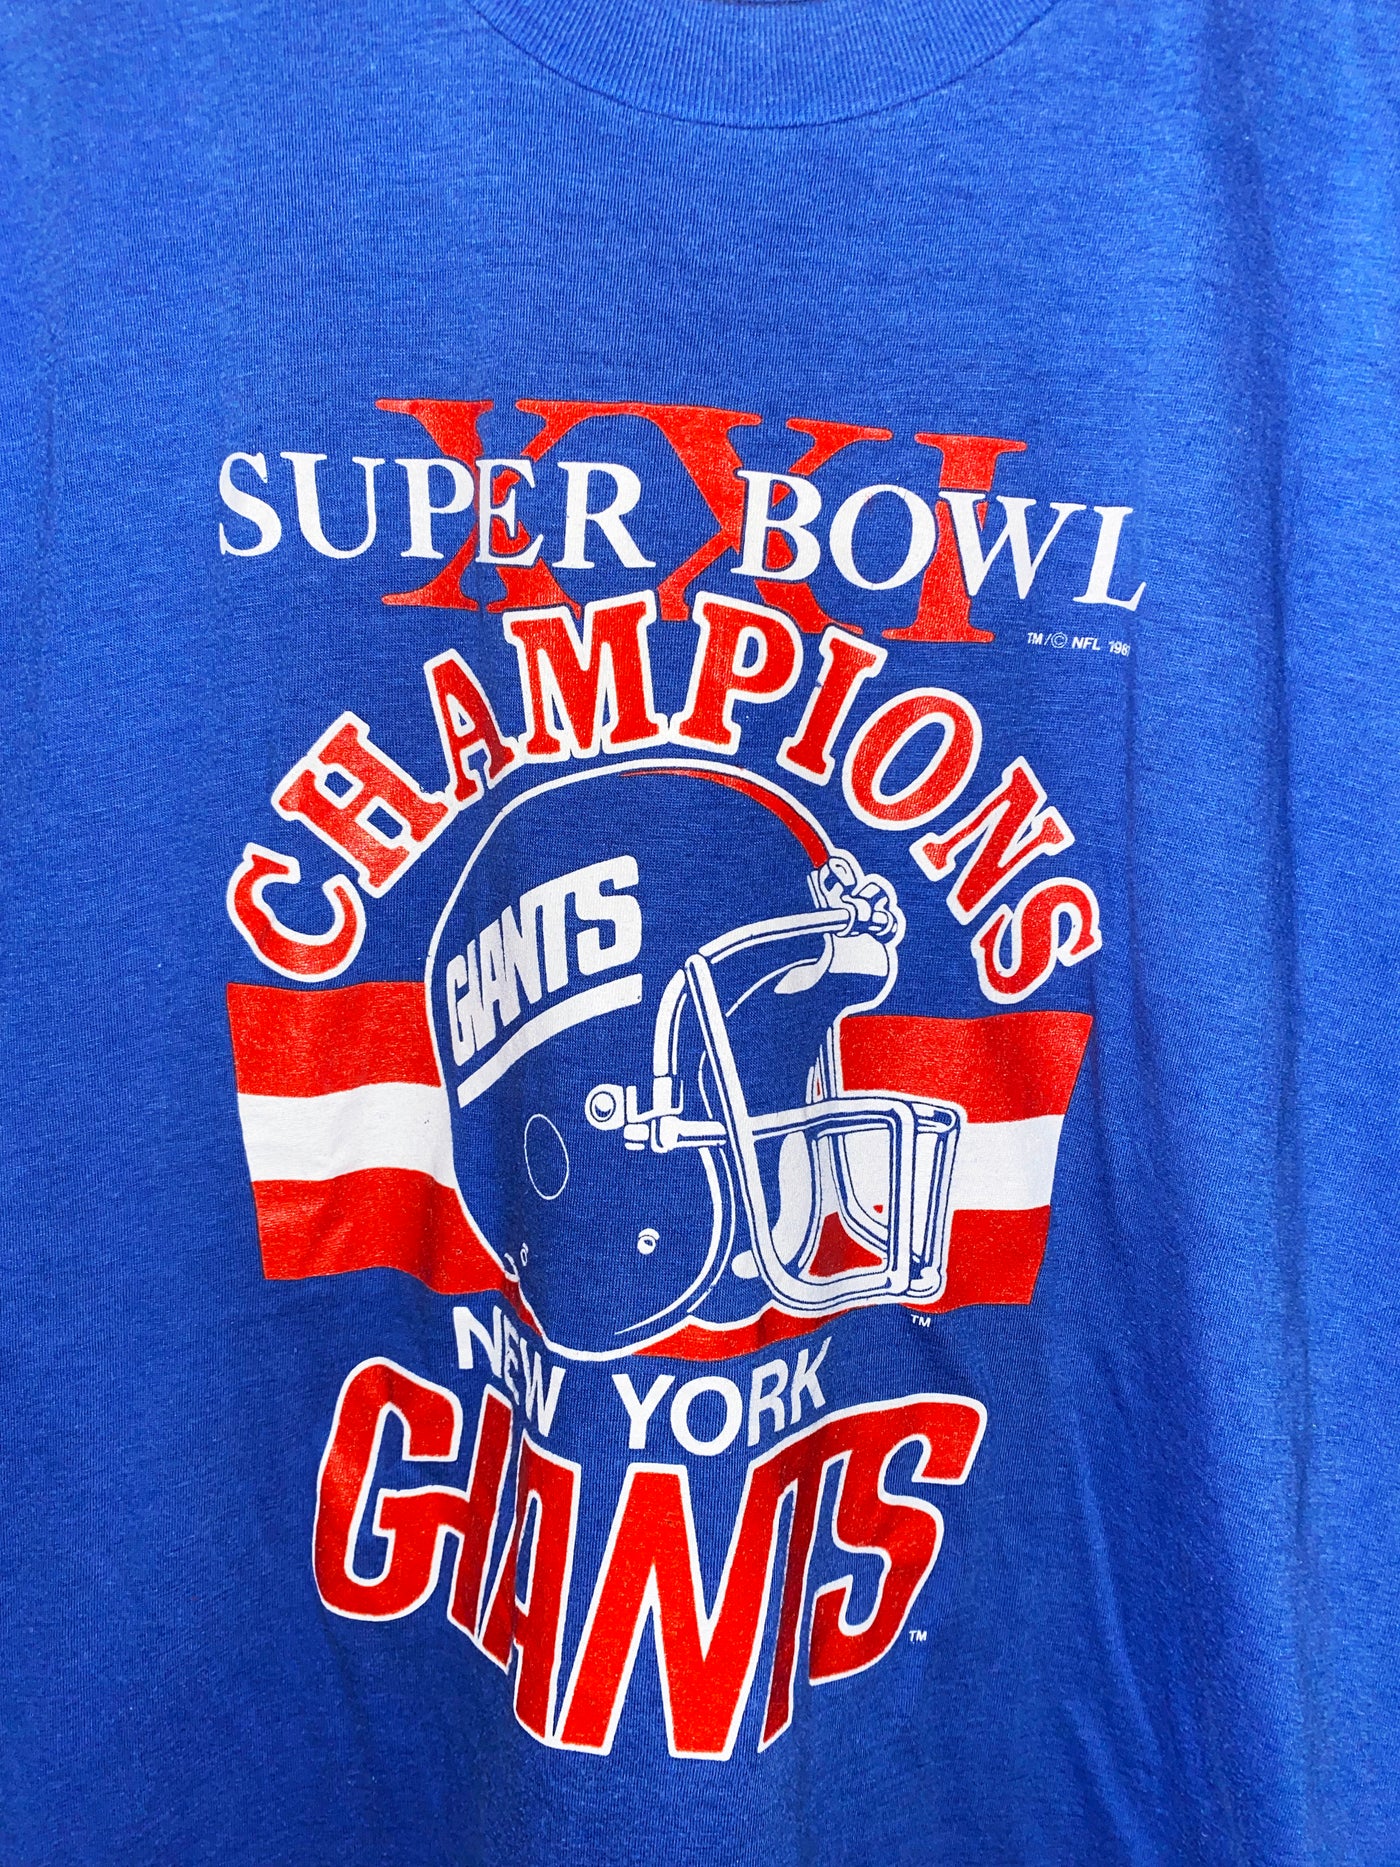 Vintage 1989 New York Giants Super Bowl T-Shirt